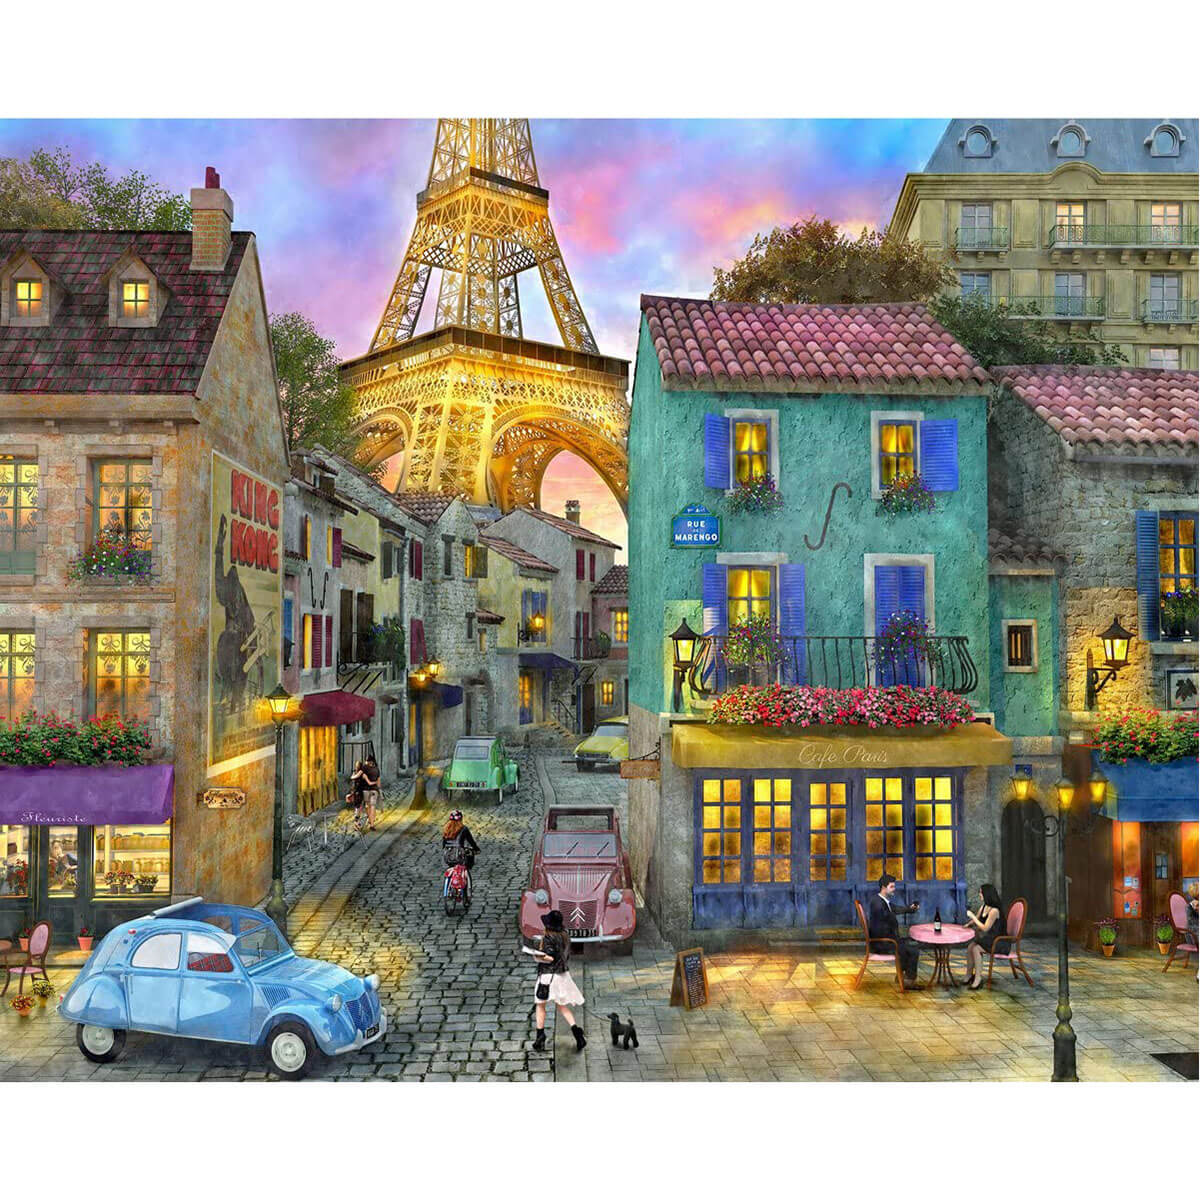 Springbok Eiffel Magic 1000 Piece Jigsaw Puzzle